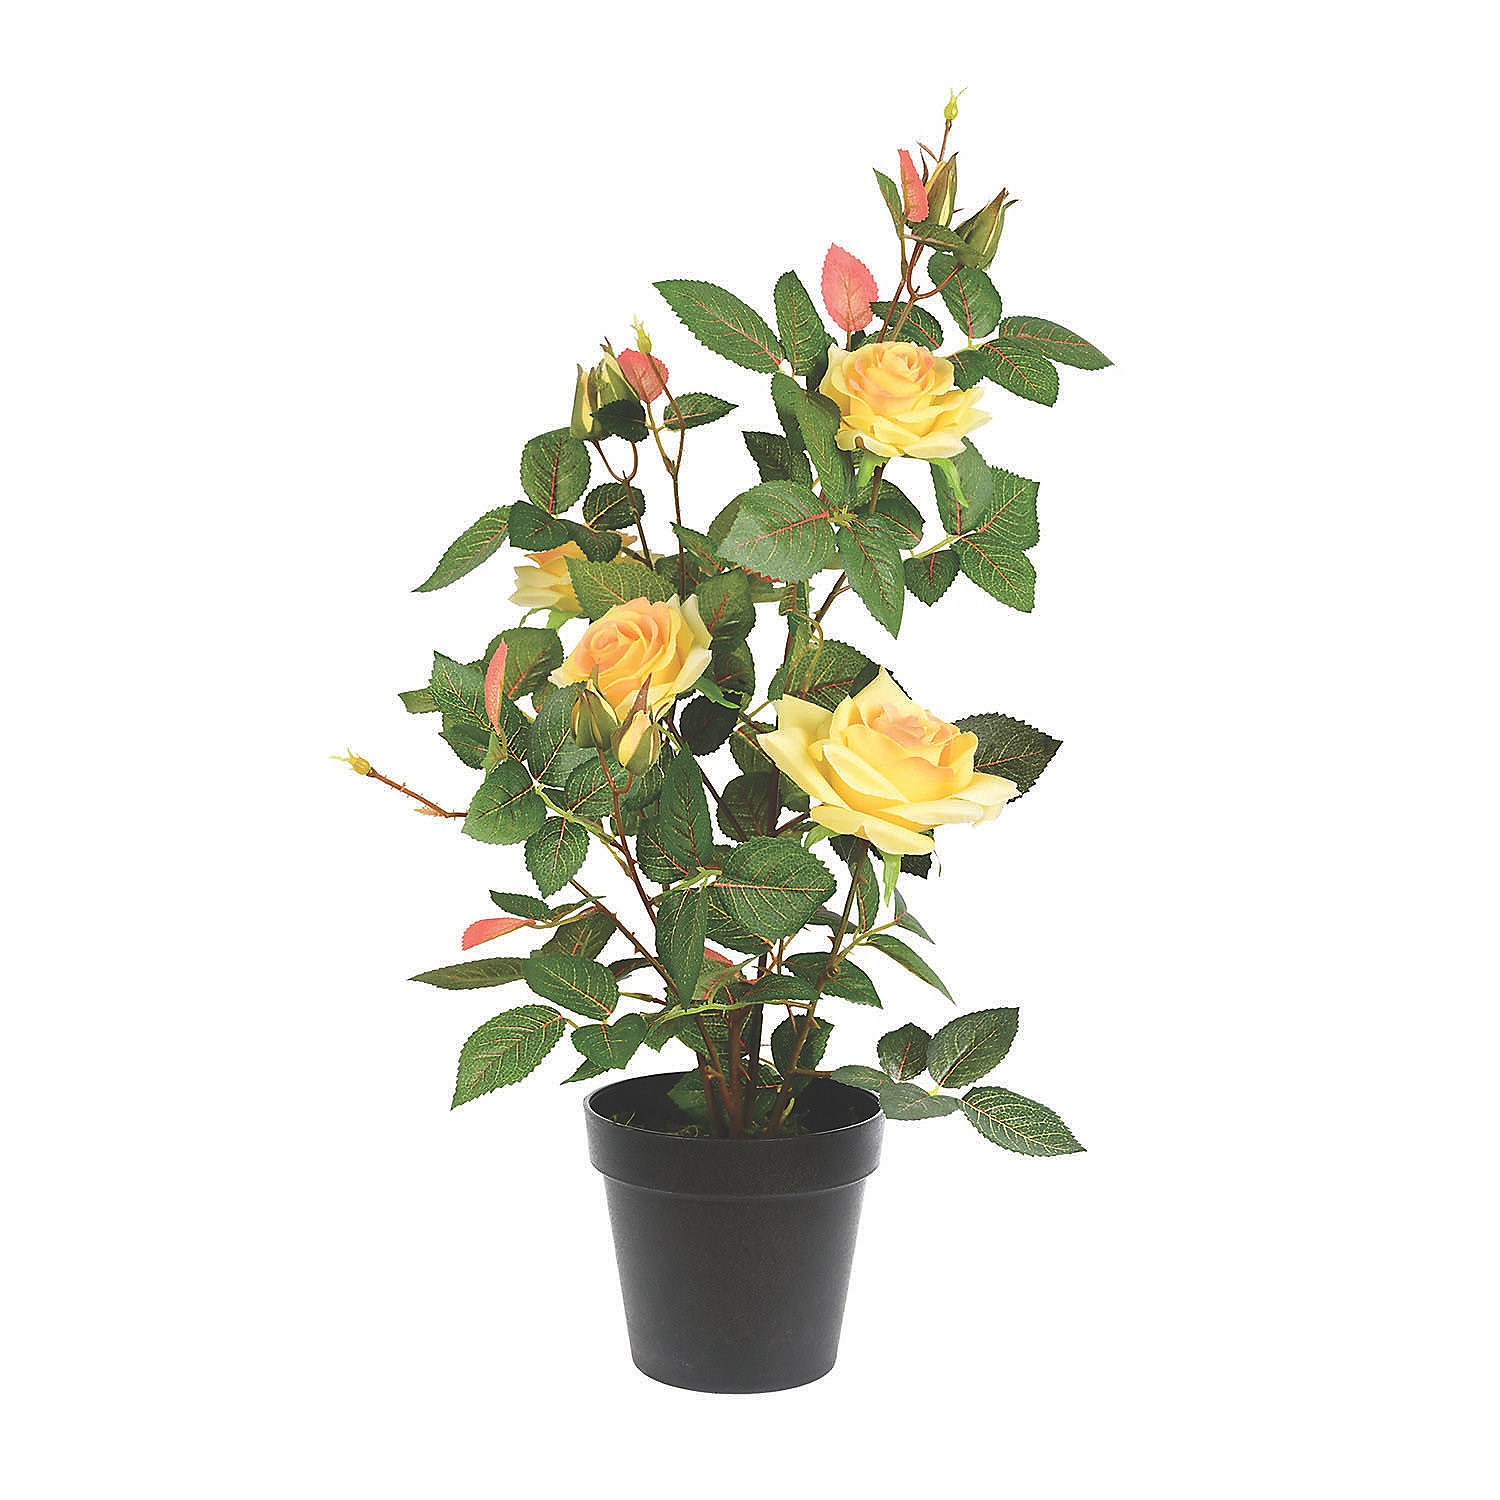 vickerman-21-artificial-yellow-rose-plant-in-pot_13938902